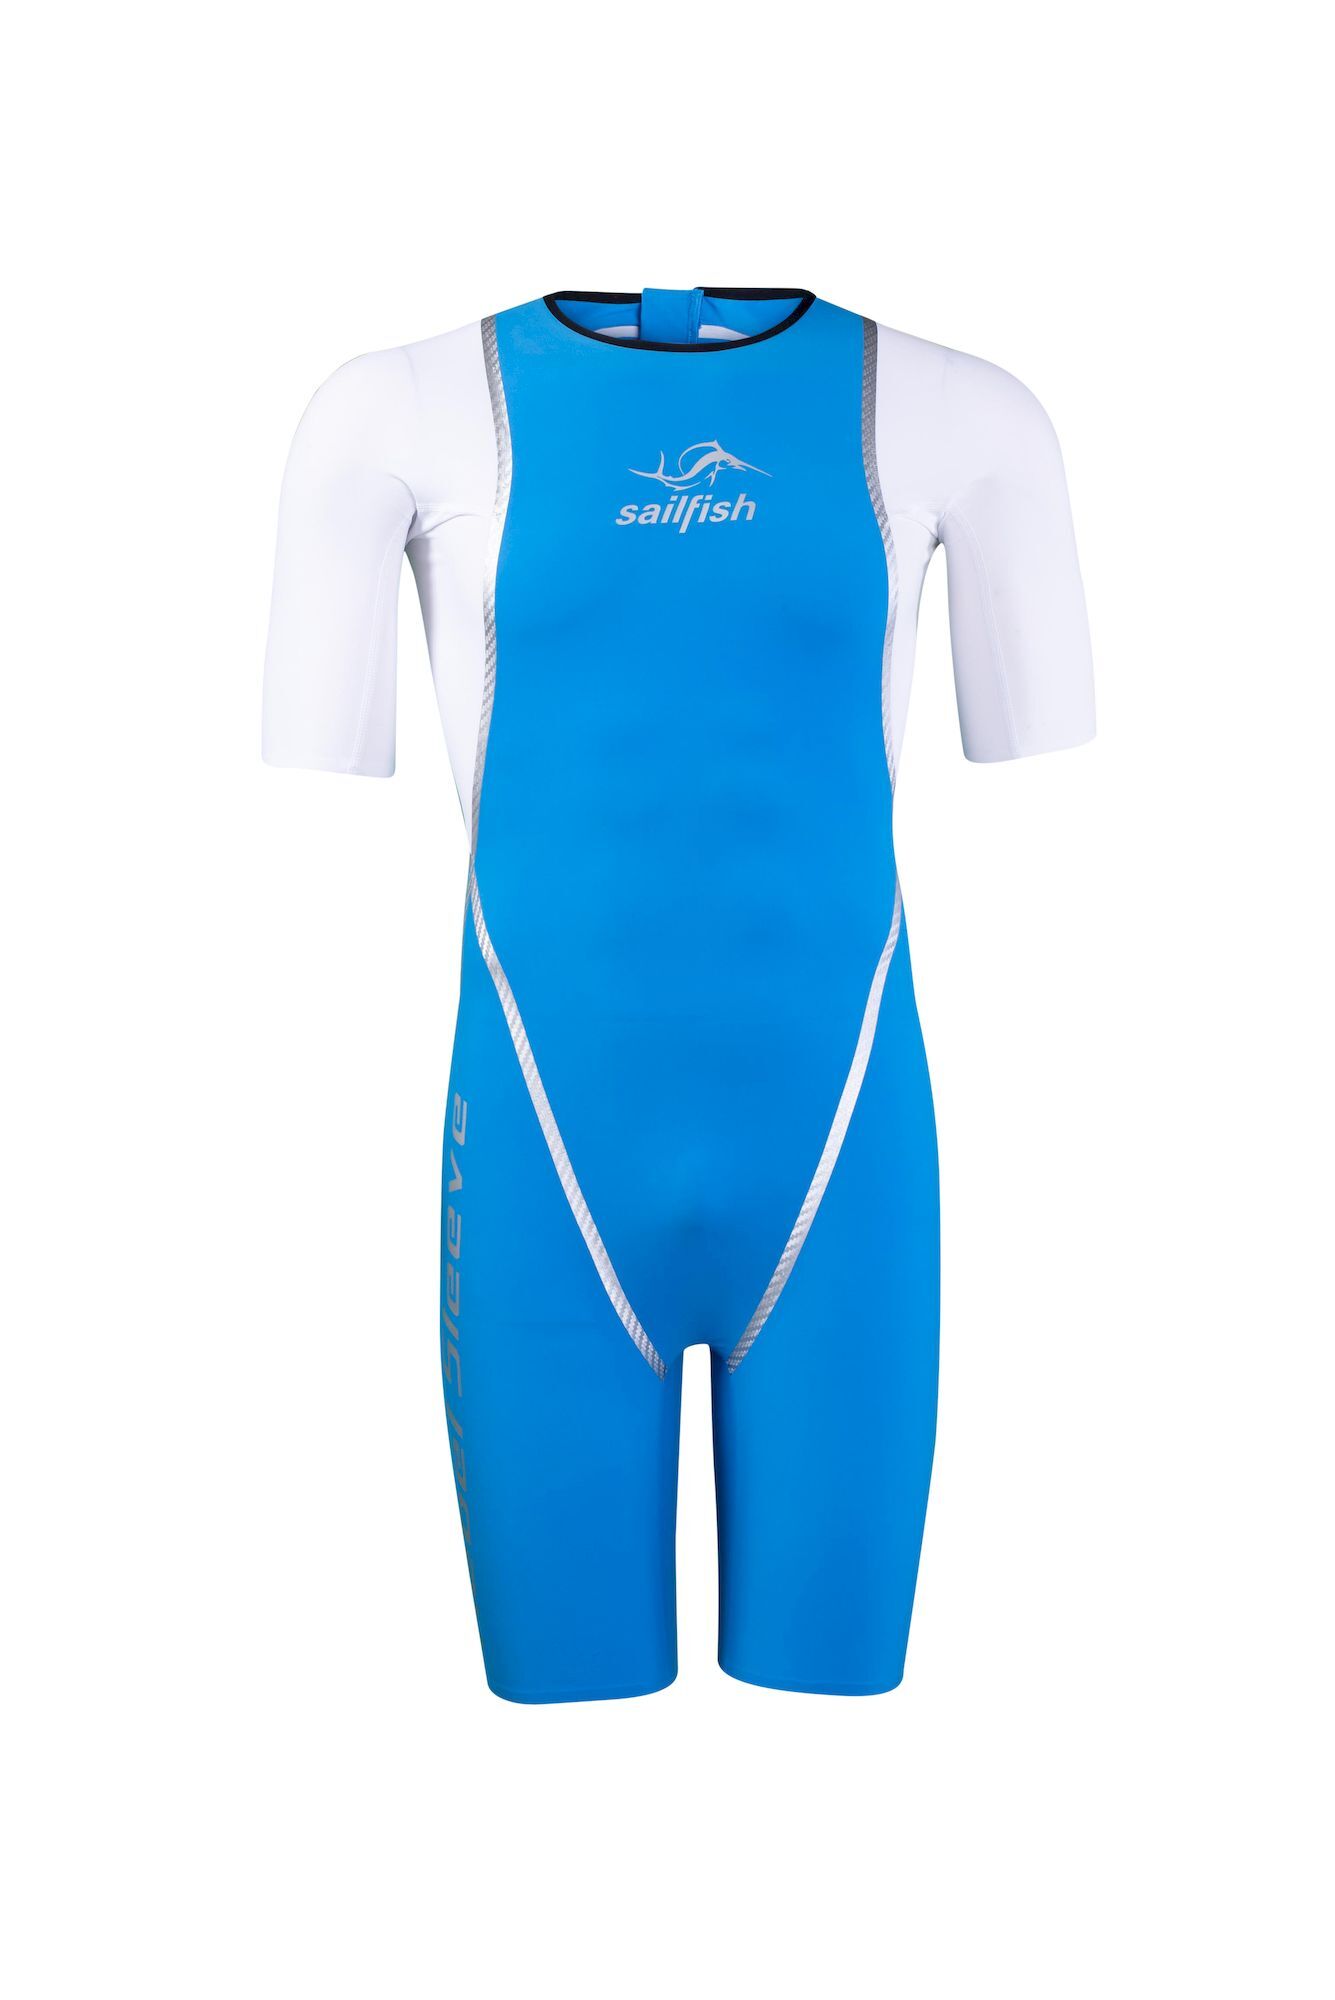 Sailfish Mens Swimskin Rebel Sleeve Pro 1 - Tri suit - Men's | Hardloop